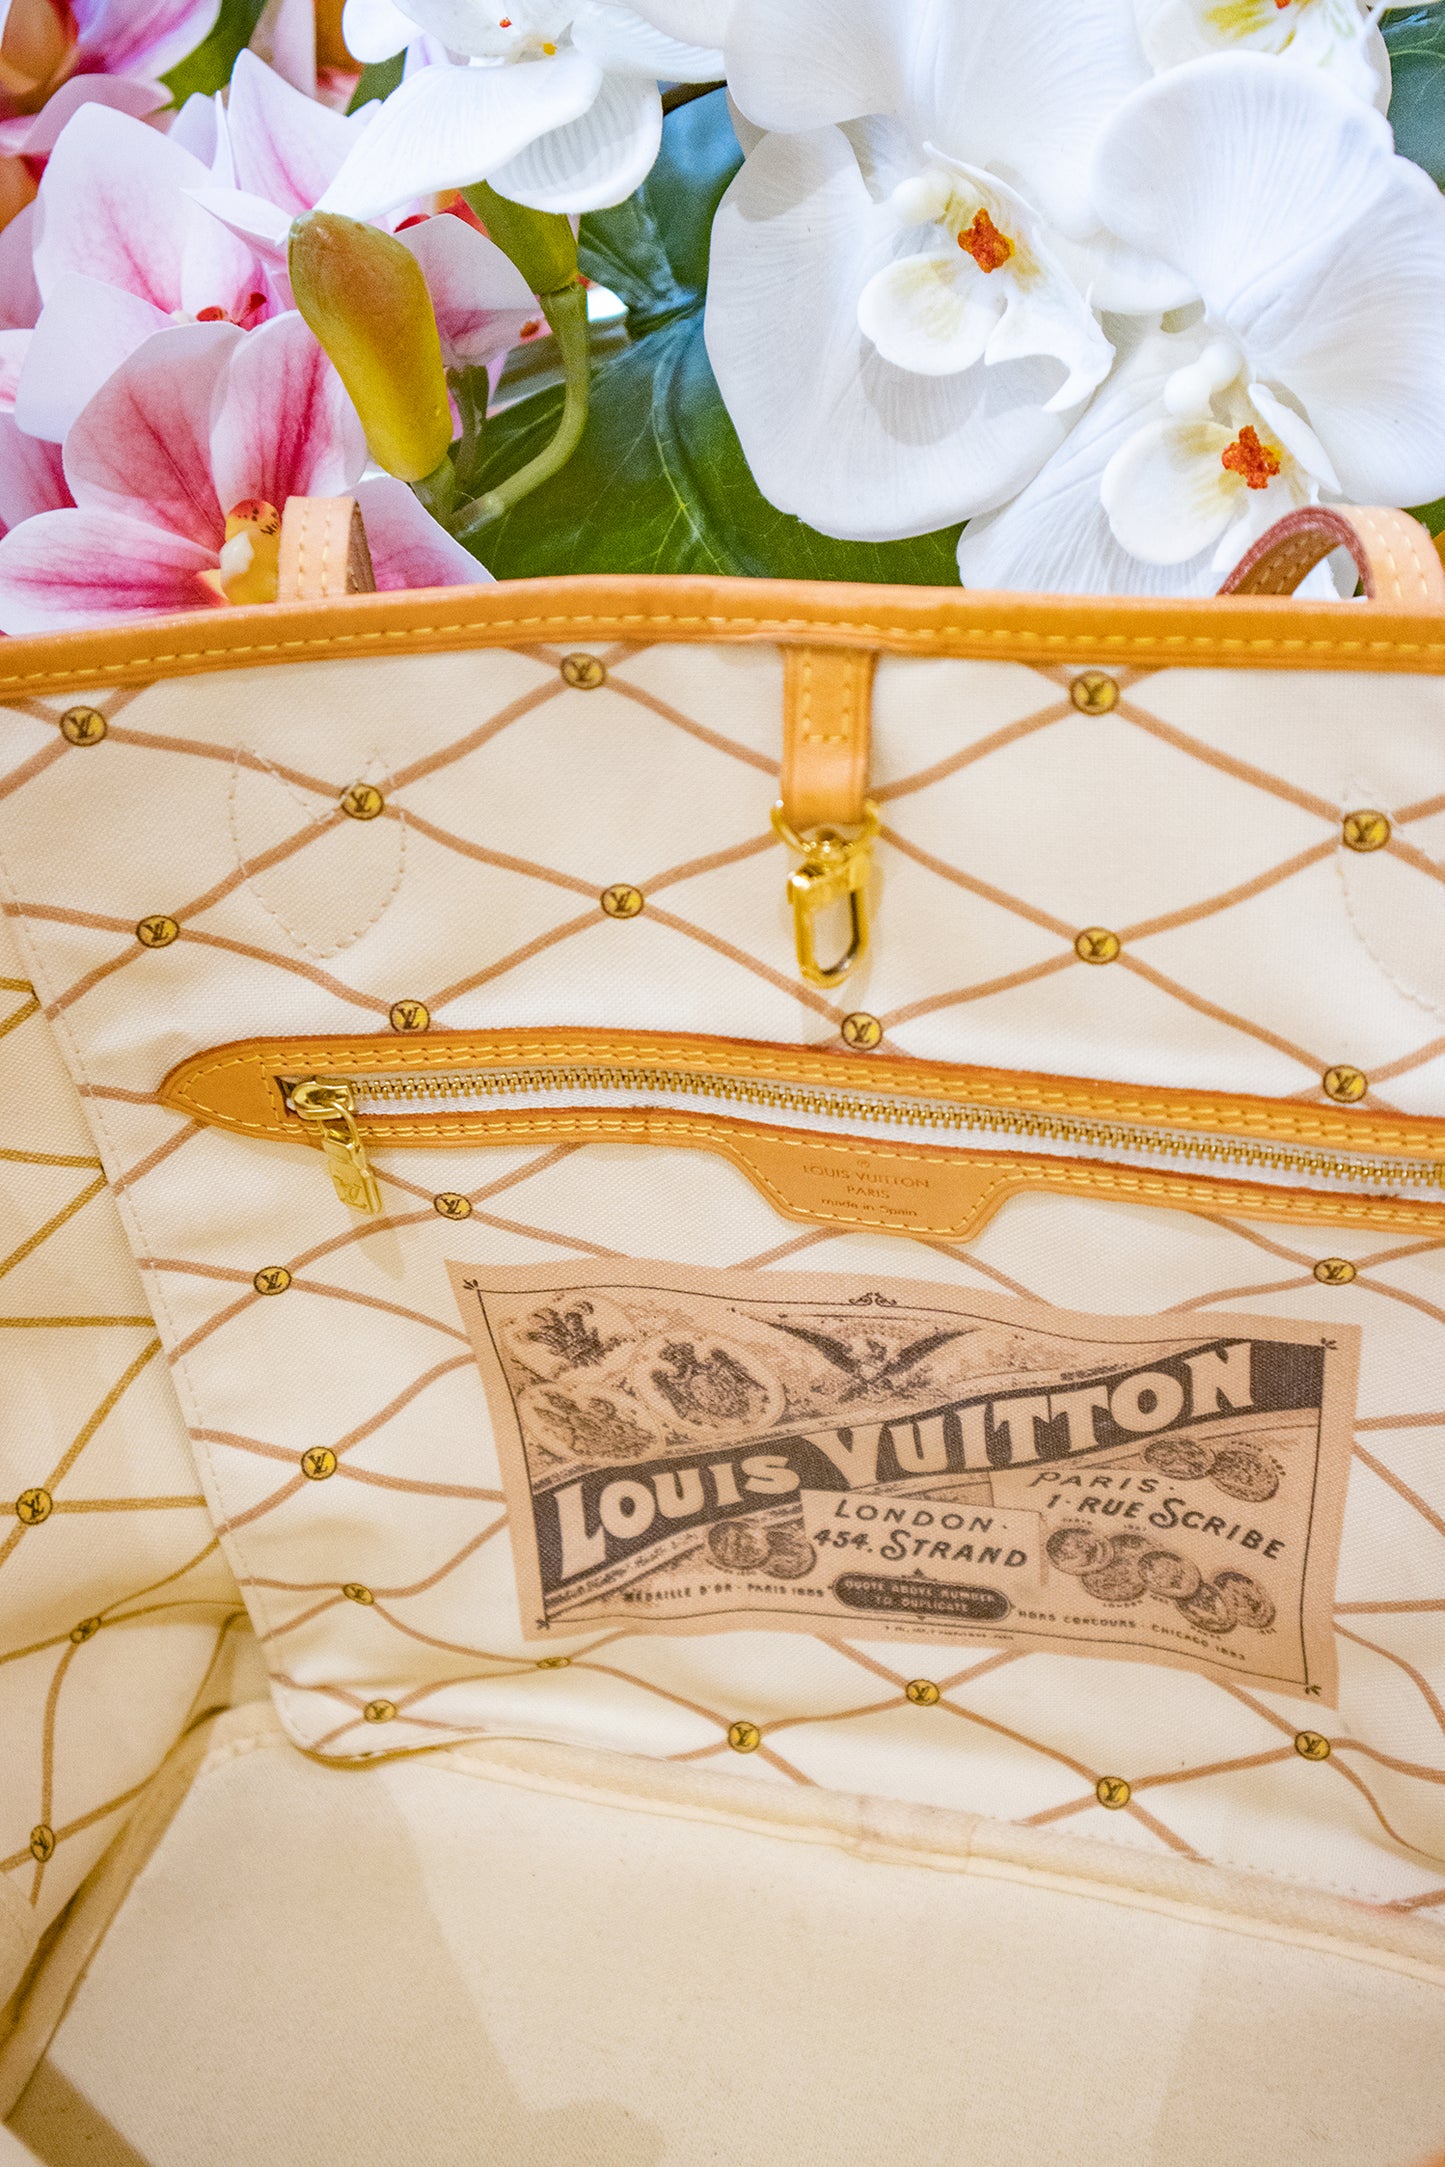 Louis Vuitton - Neverfull Shopper Limited Edition